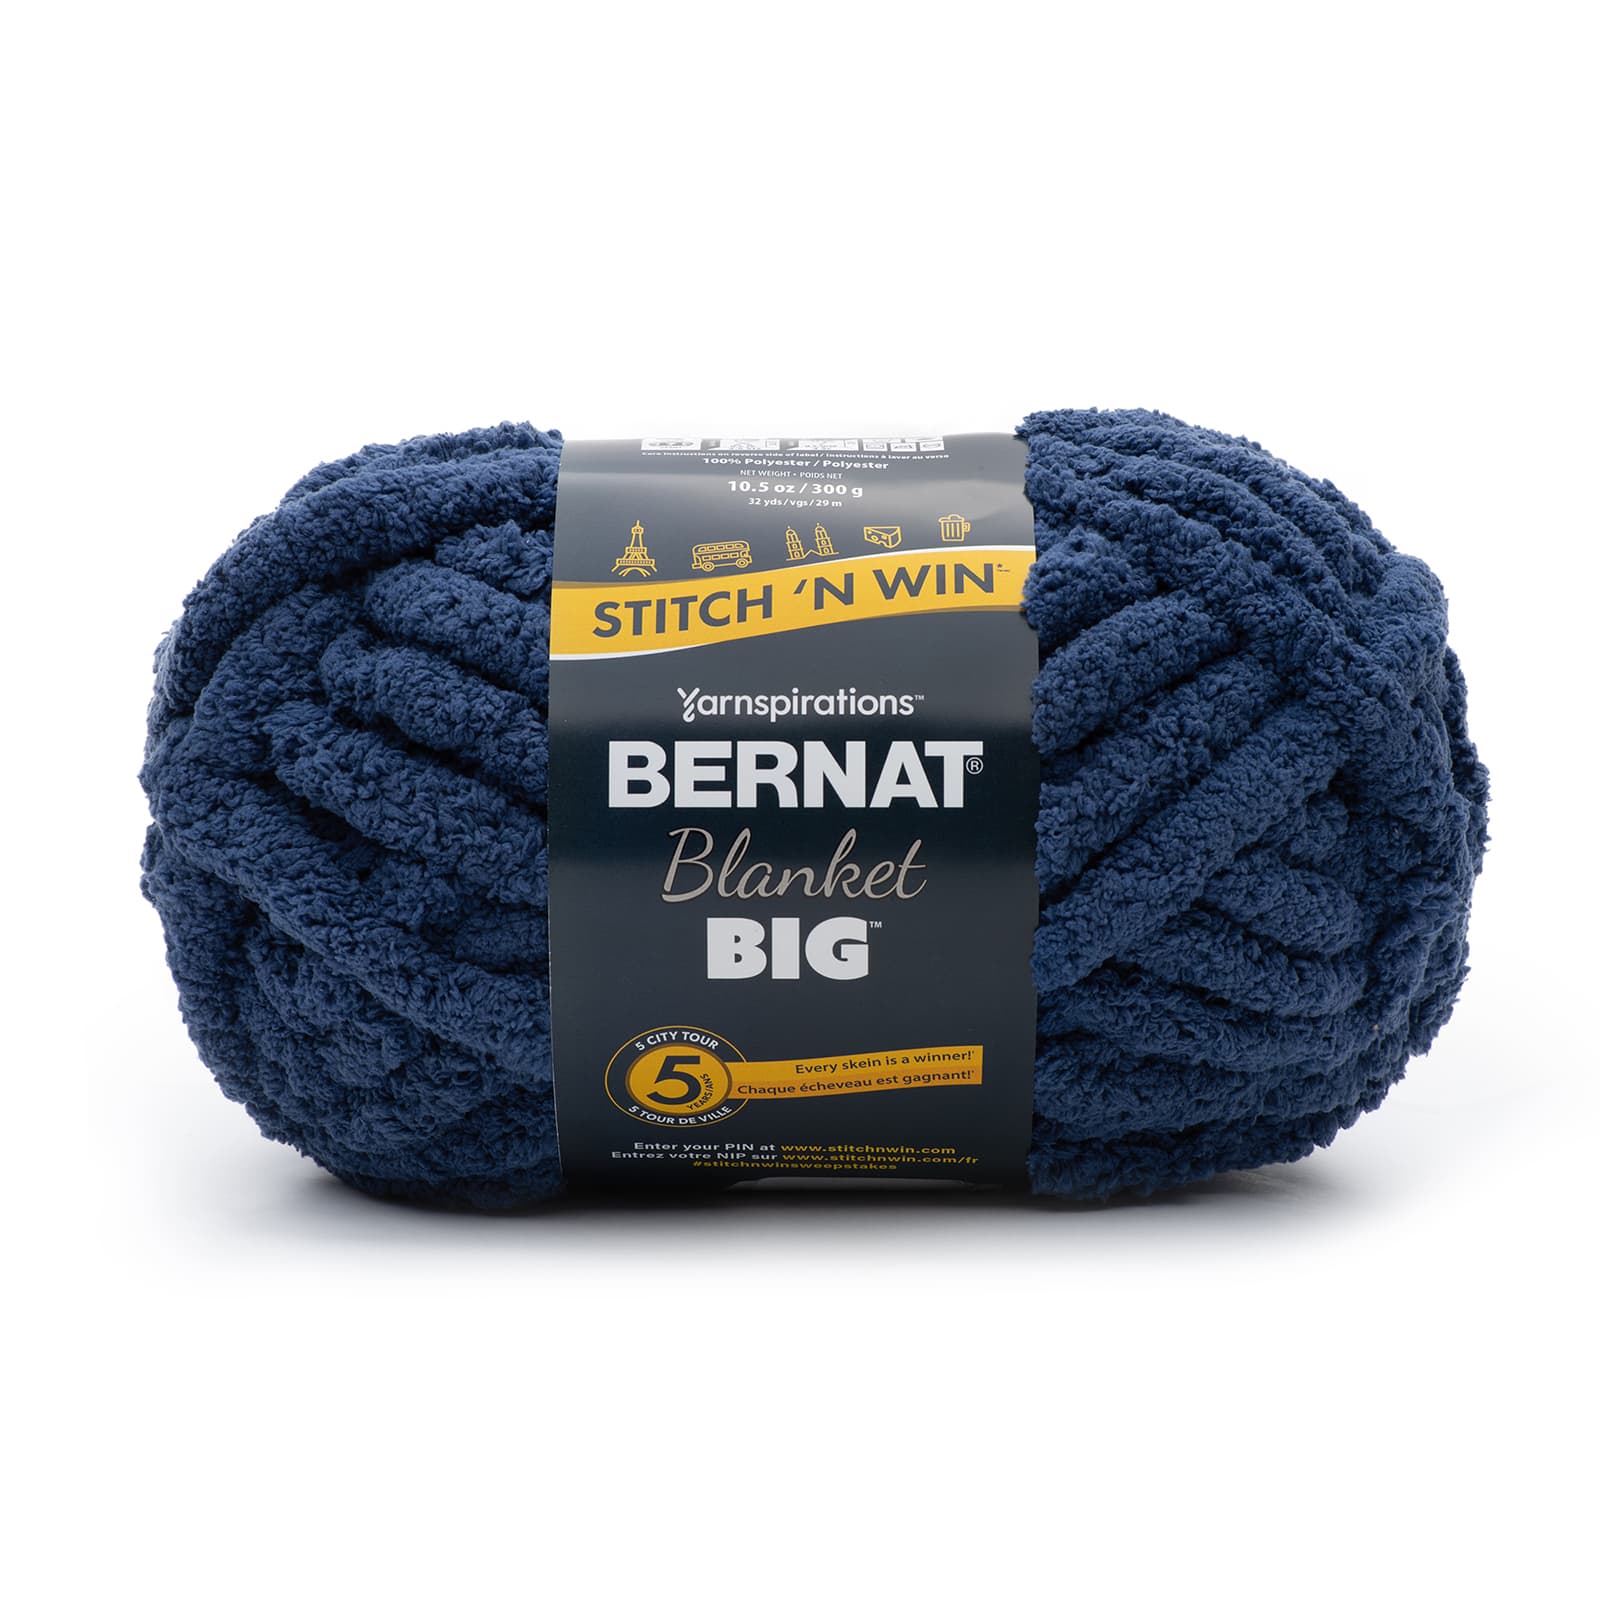 Bernat blanket big yarn patterns knit